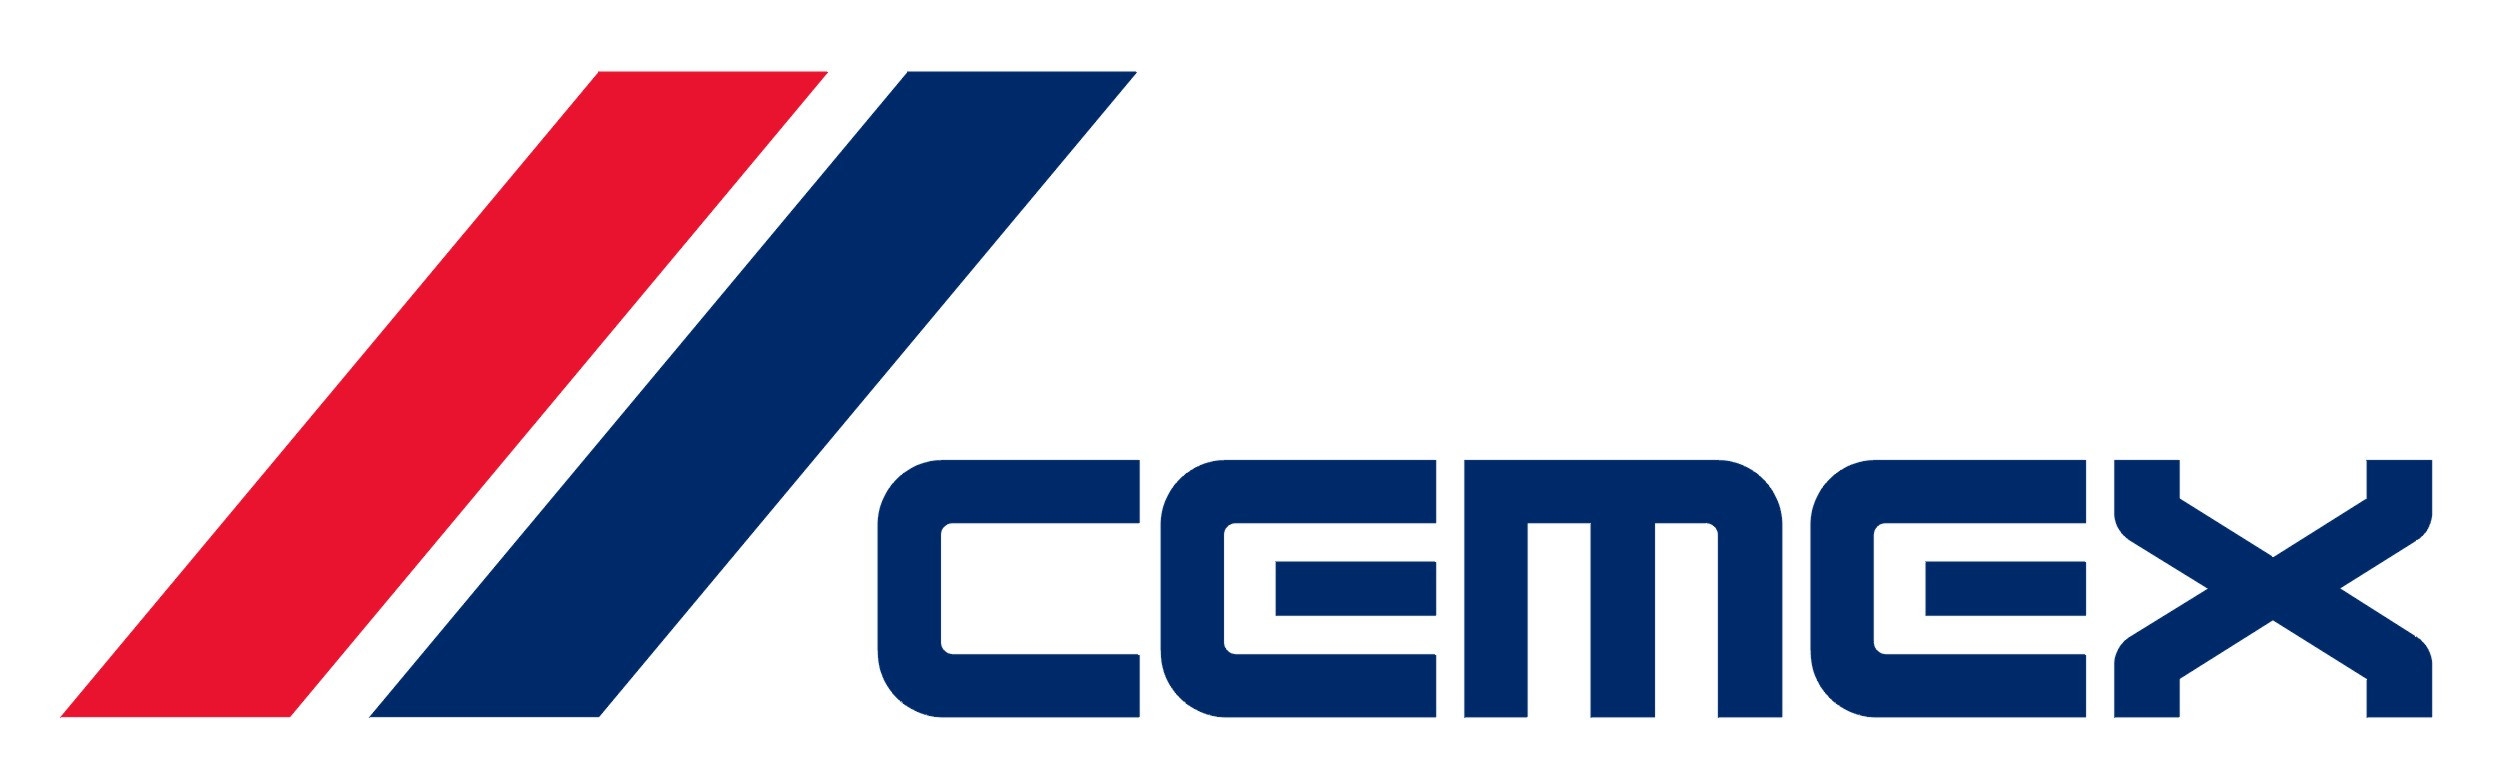 Cemex Venezuela Logo photo - 1